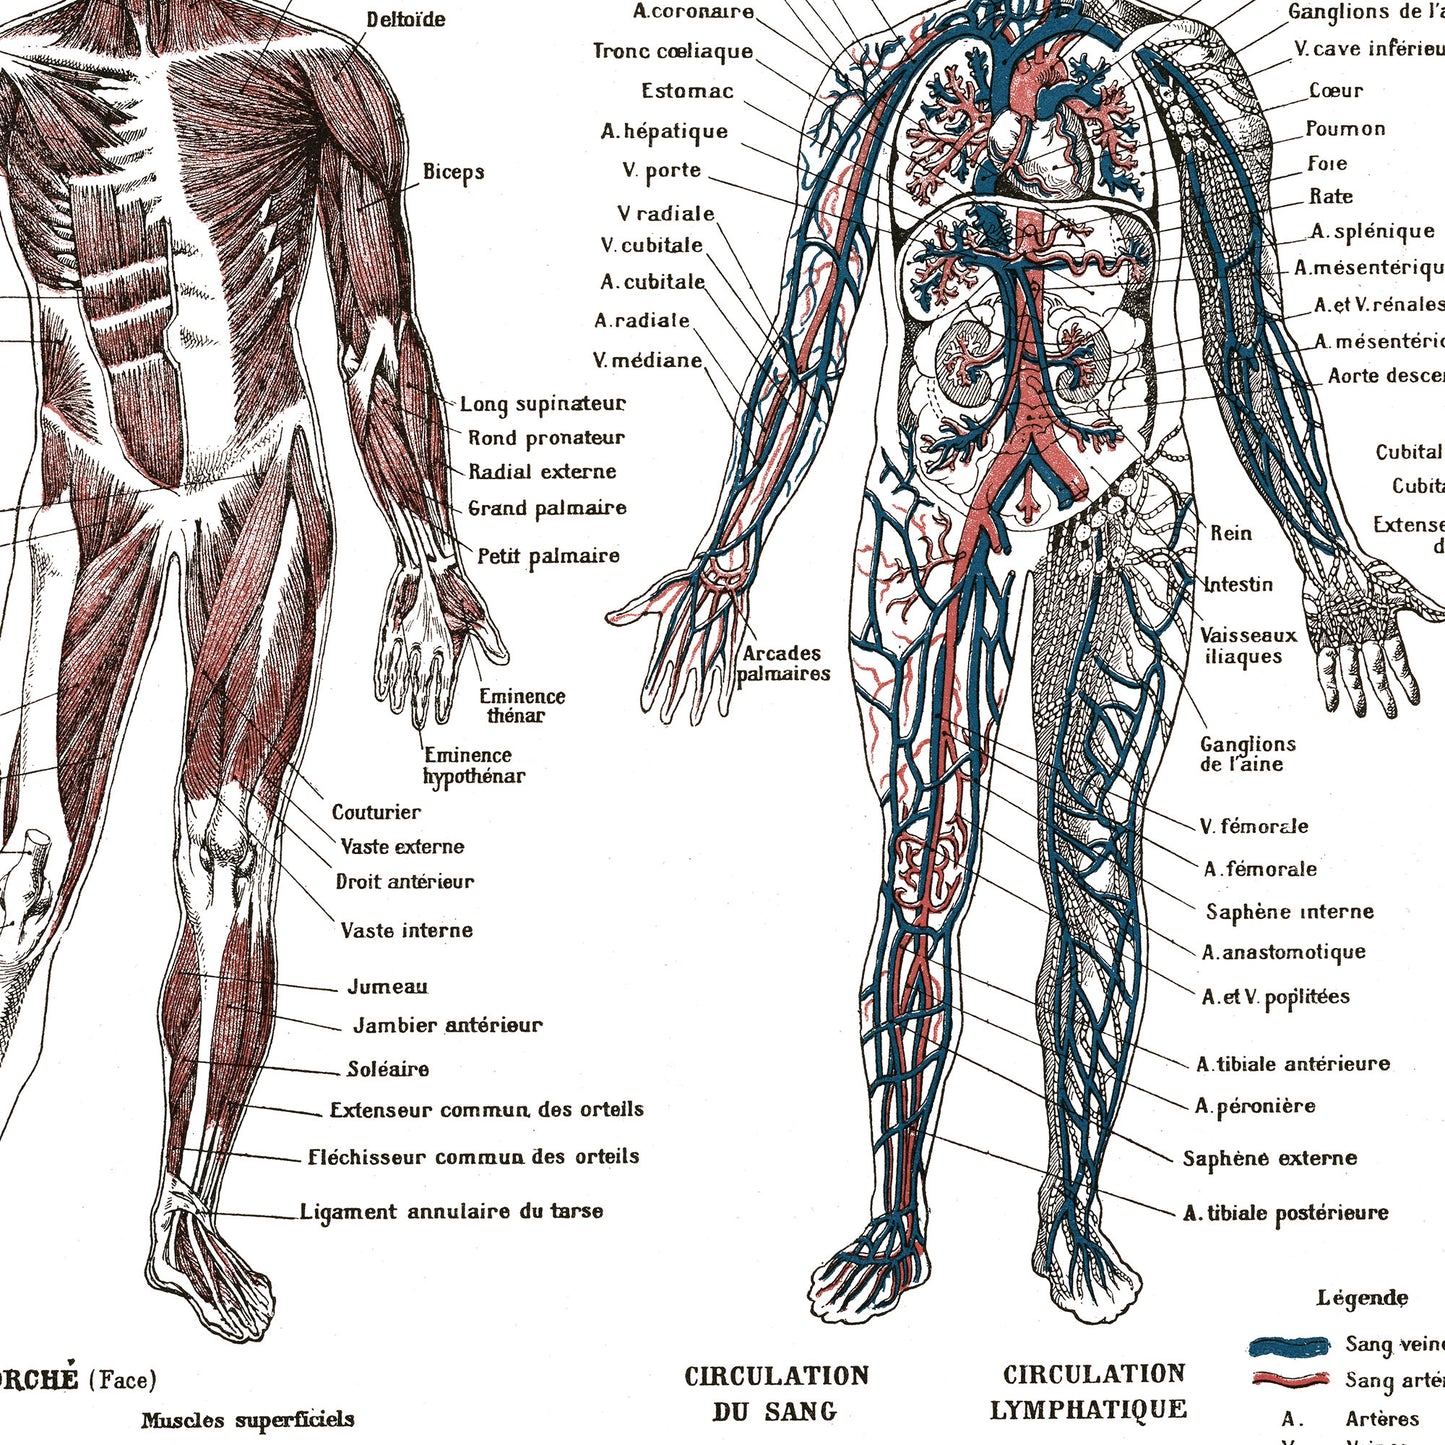 Grande Affiche d'Anatomie Humaine - Fond Blanc